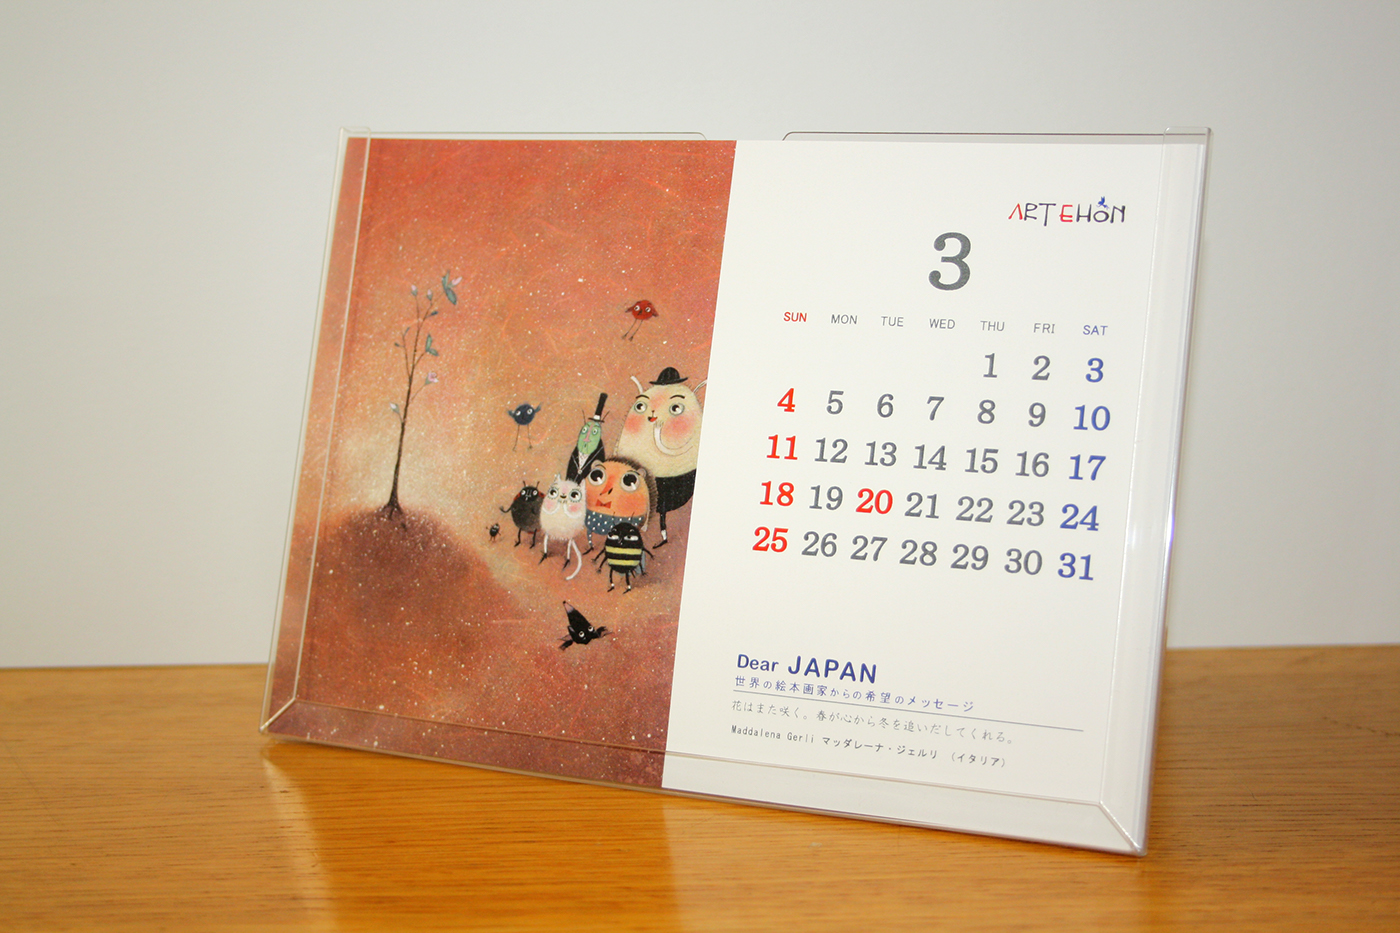 japan art ehon gerli dear japan calendar tokyo